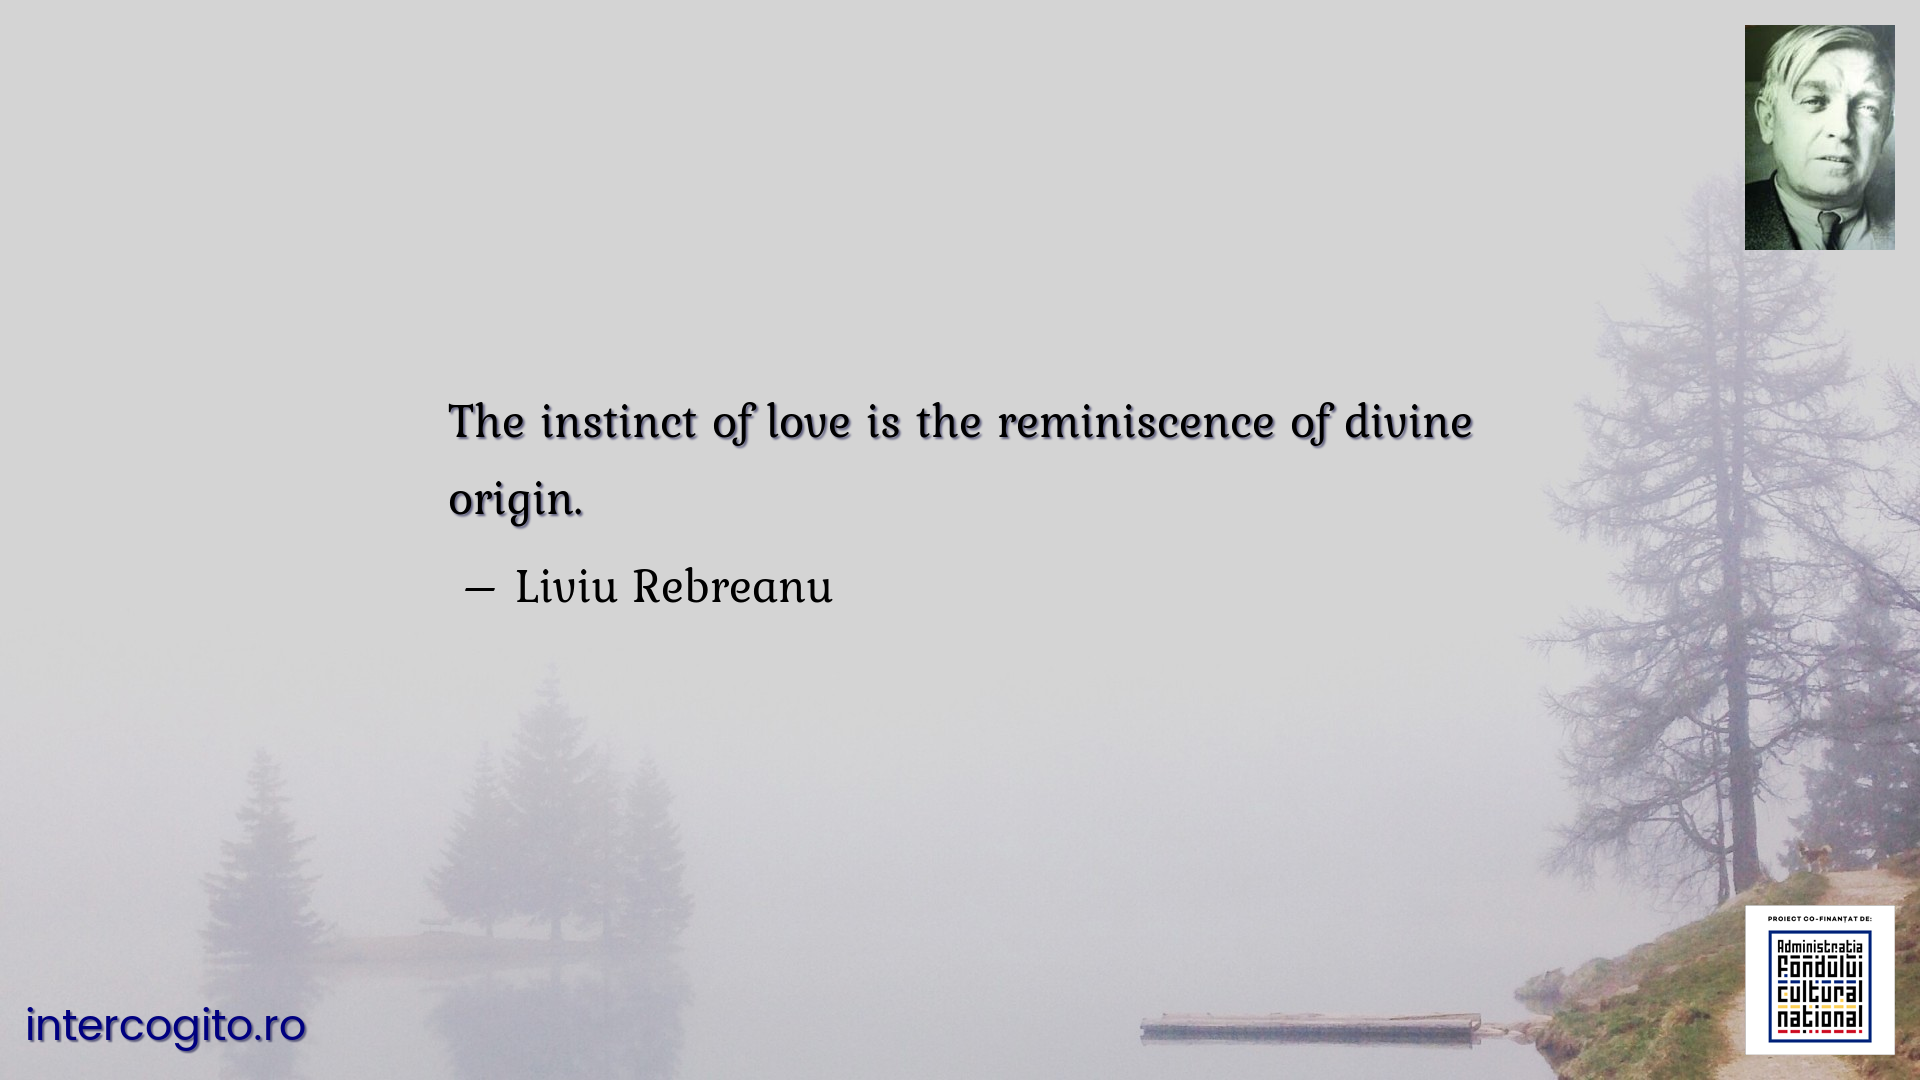 The instinct of love is the reminiscence of divine origin.